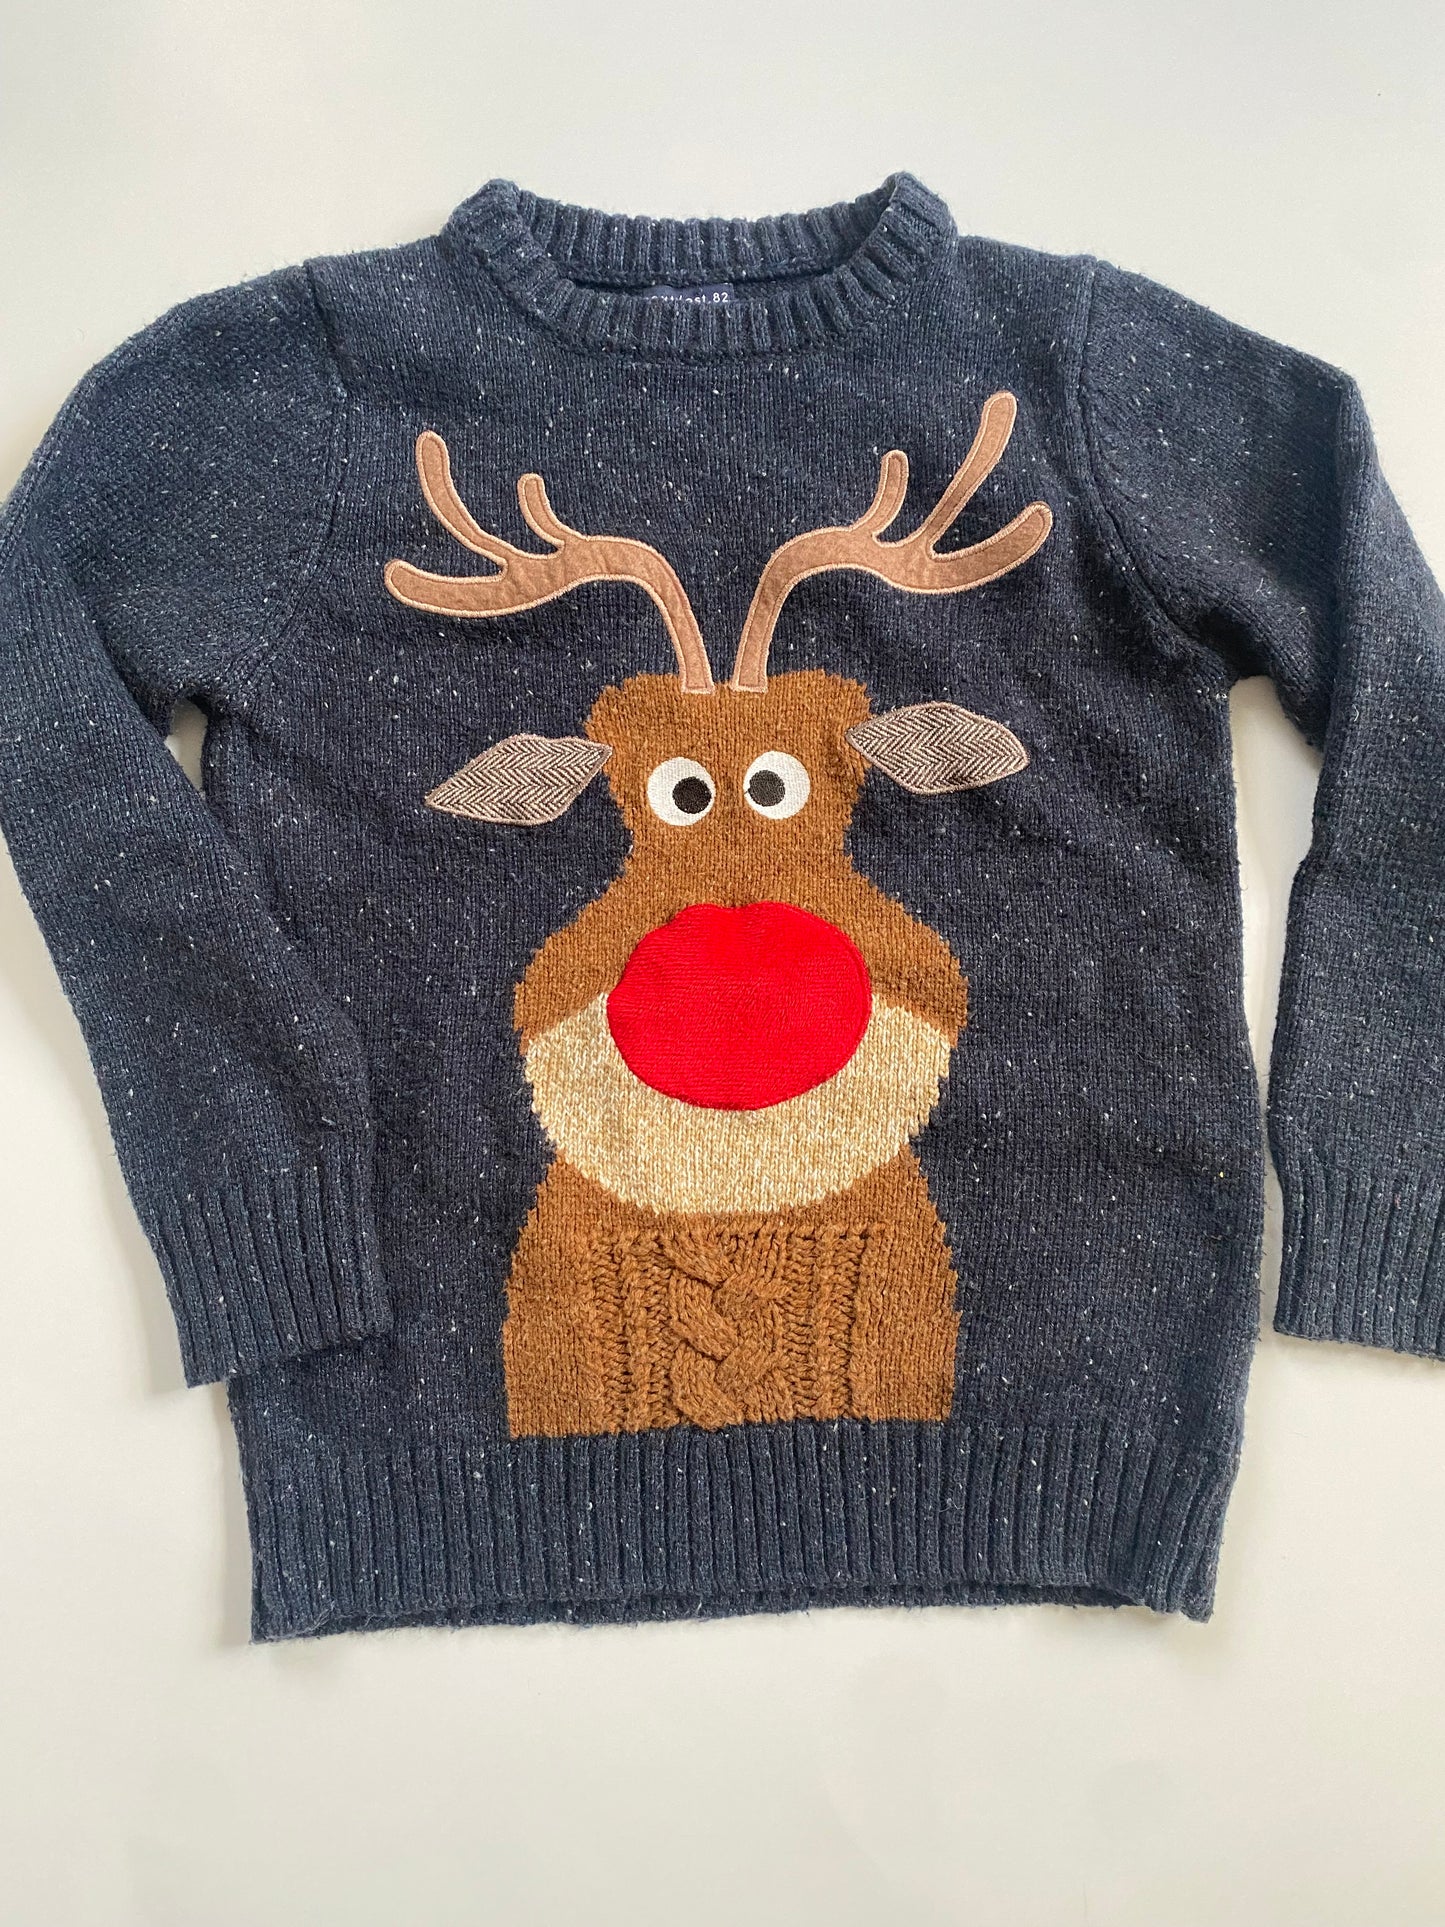 Next Reindeer Sweater size 6 PPU Mariemont